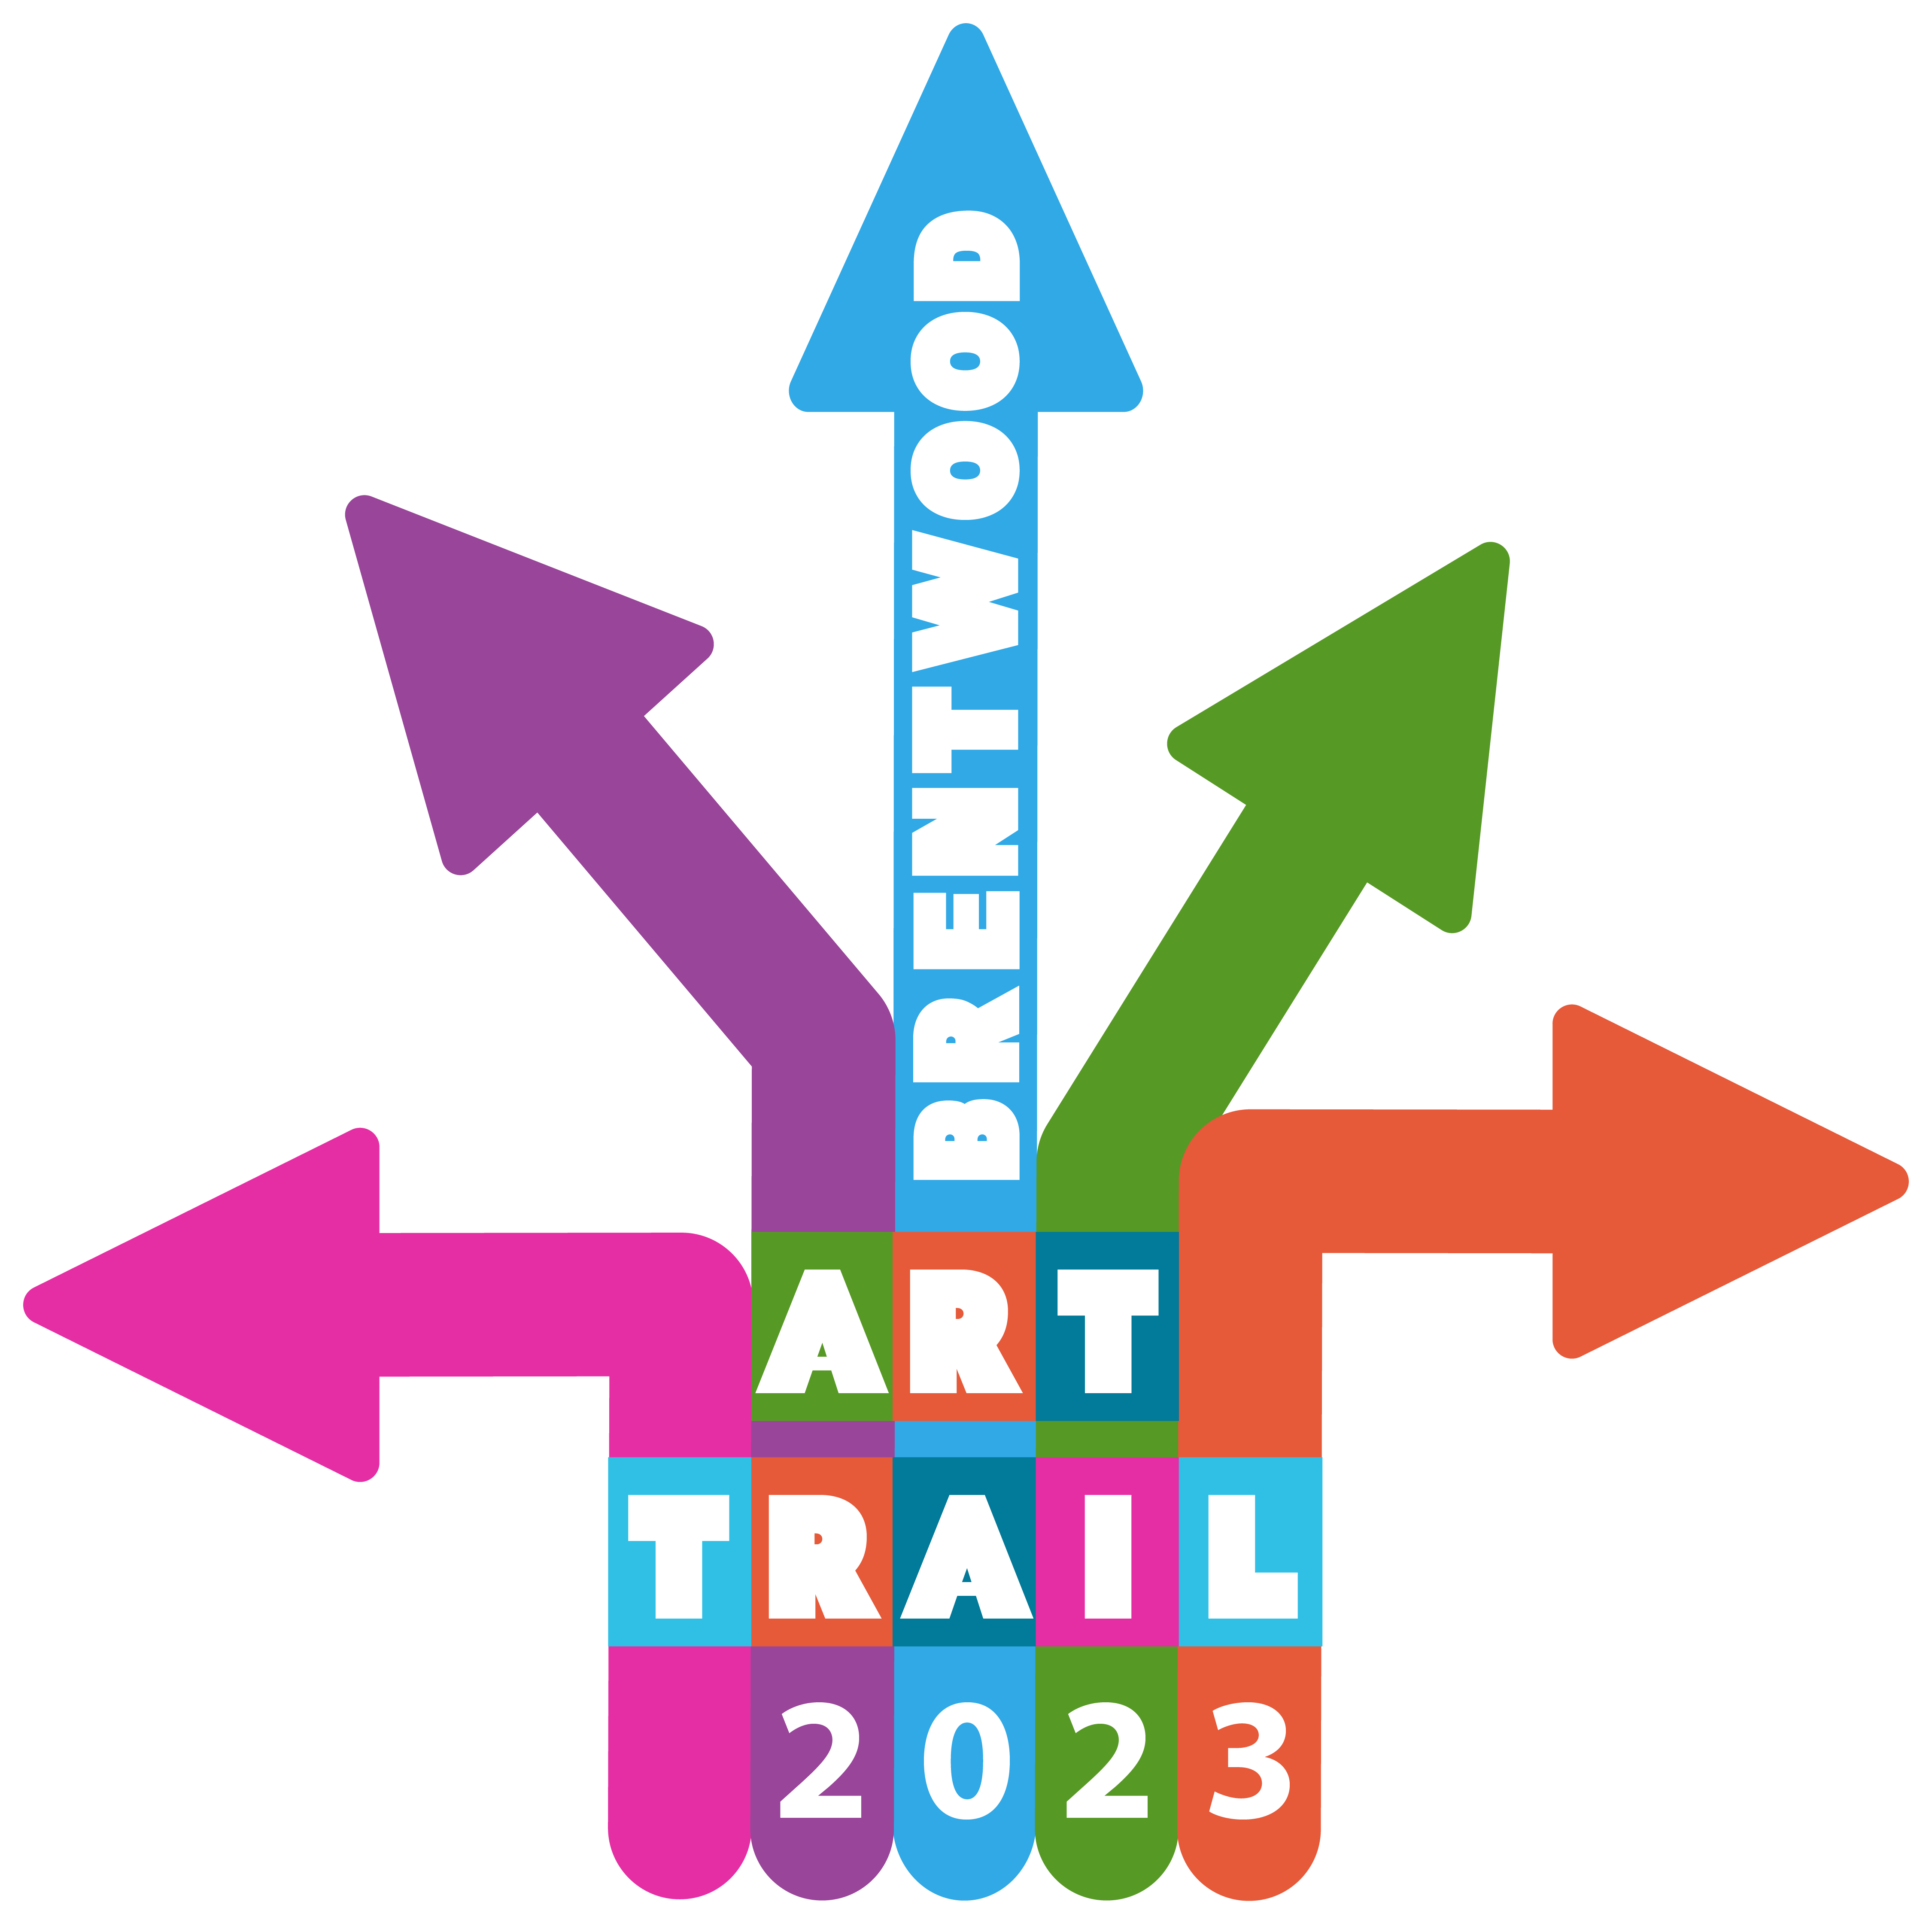 Brentwood Art Trail logo 2023